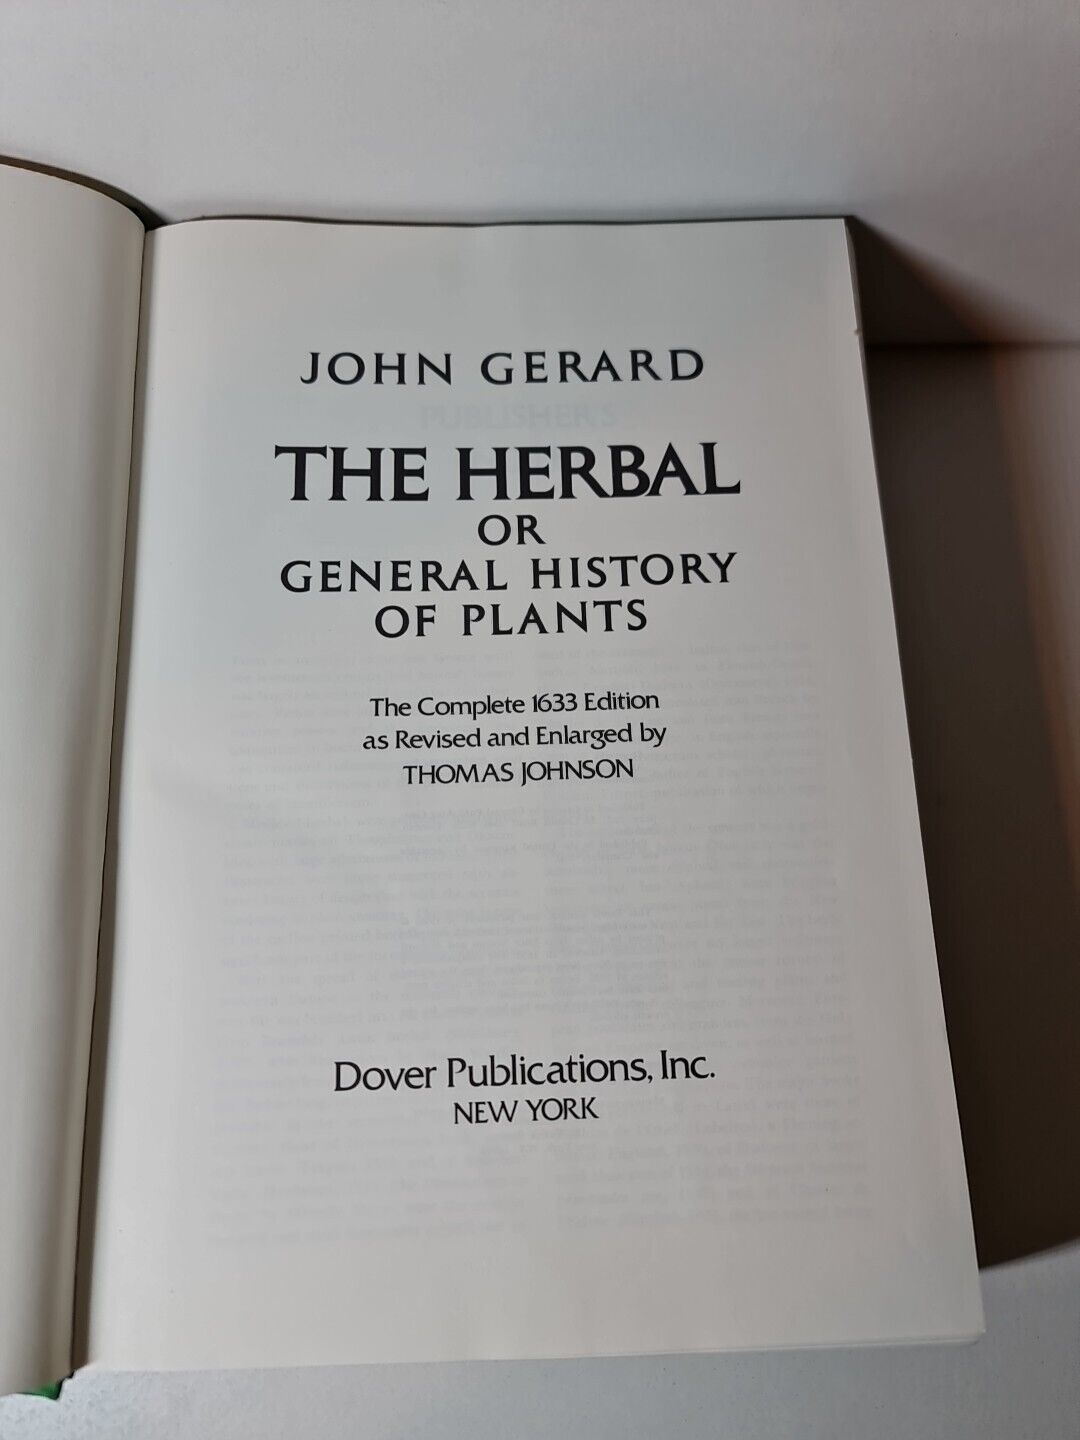 The Herbal by John Gerard (2003)